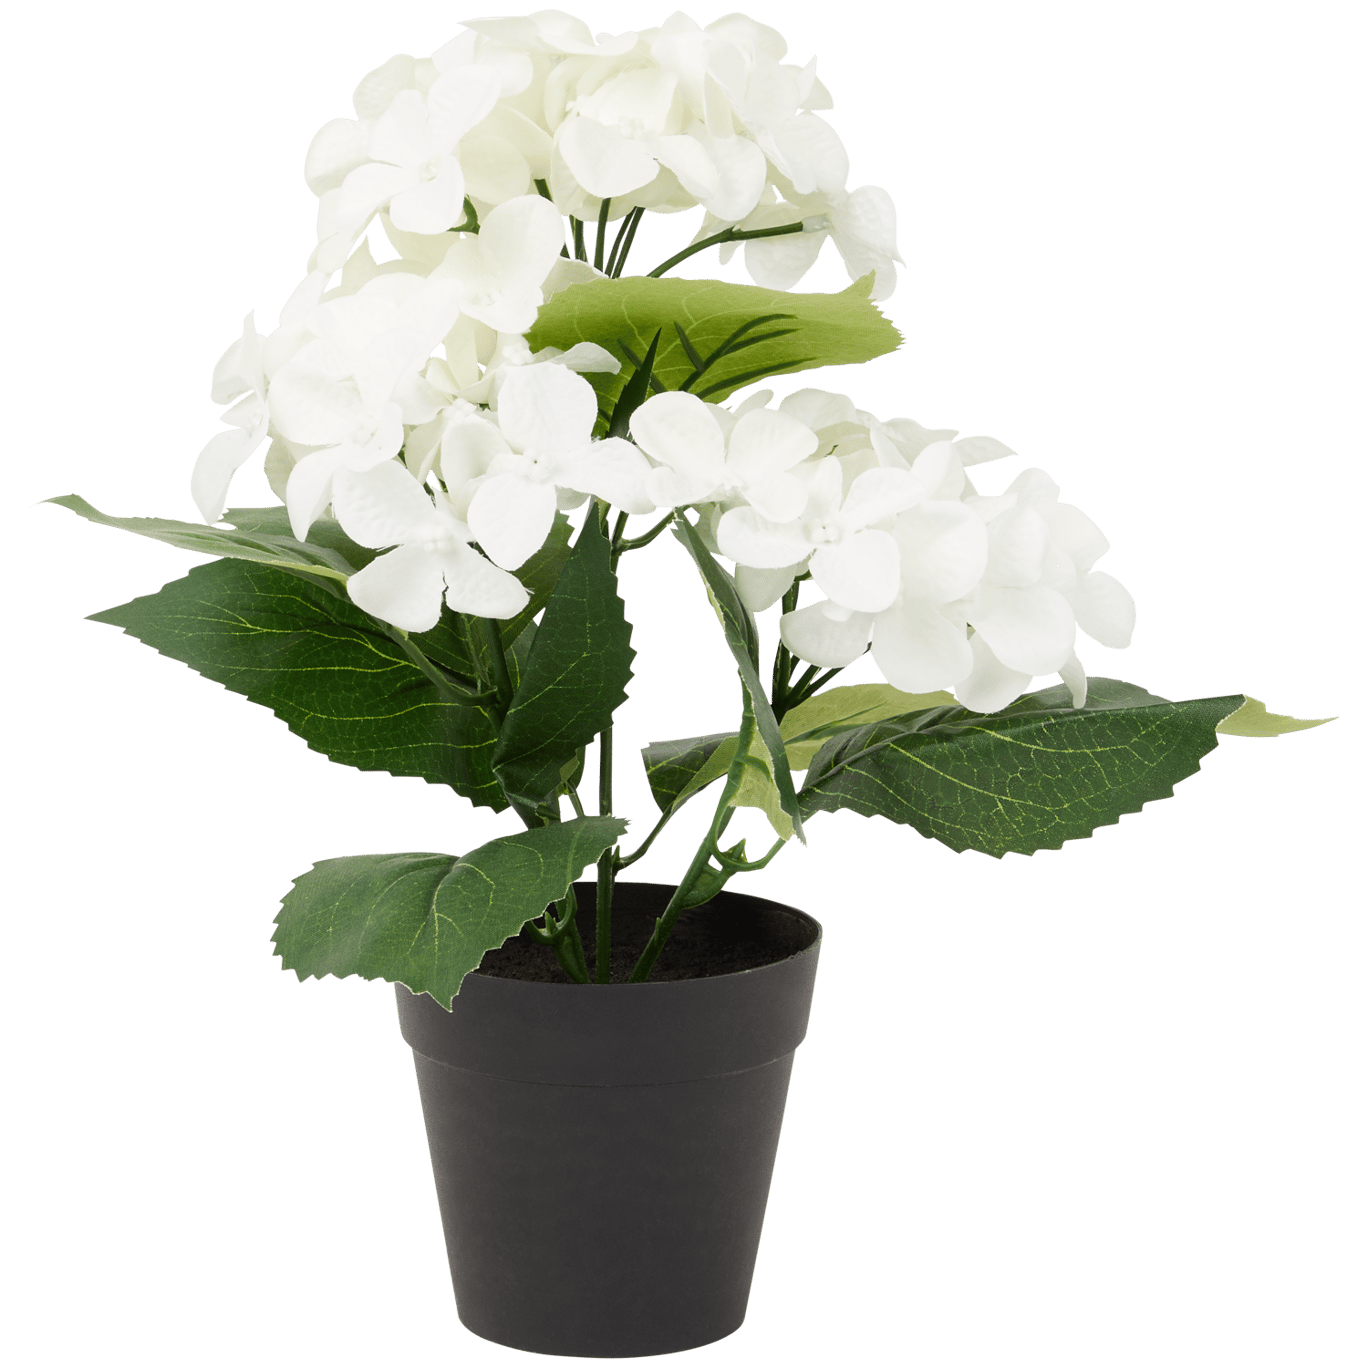 Hortensia artificial en maceta